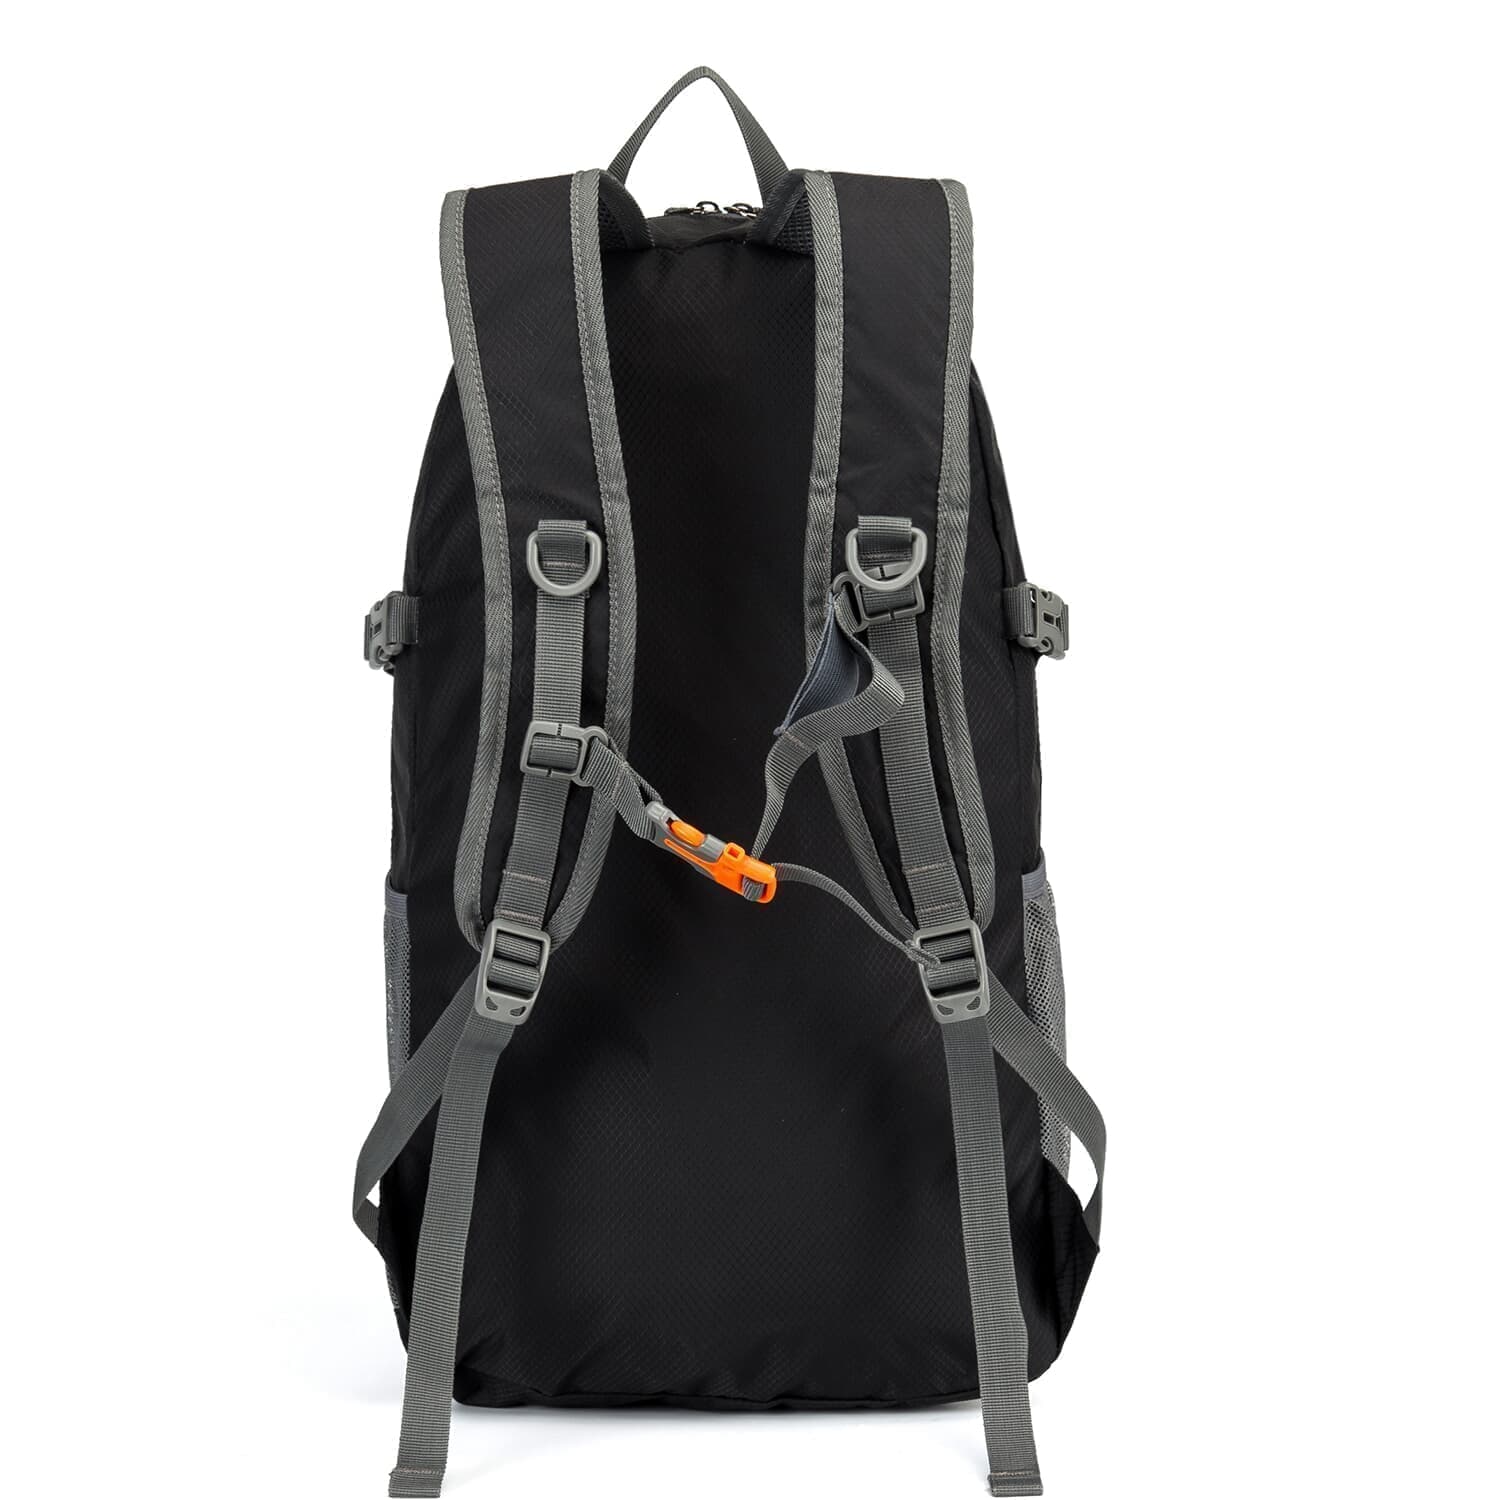 Homfu Foldable Backpack For Travel Packable Daypack For Hiking Camping Waterproof Lightweight Bag Black (Black-35L)  